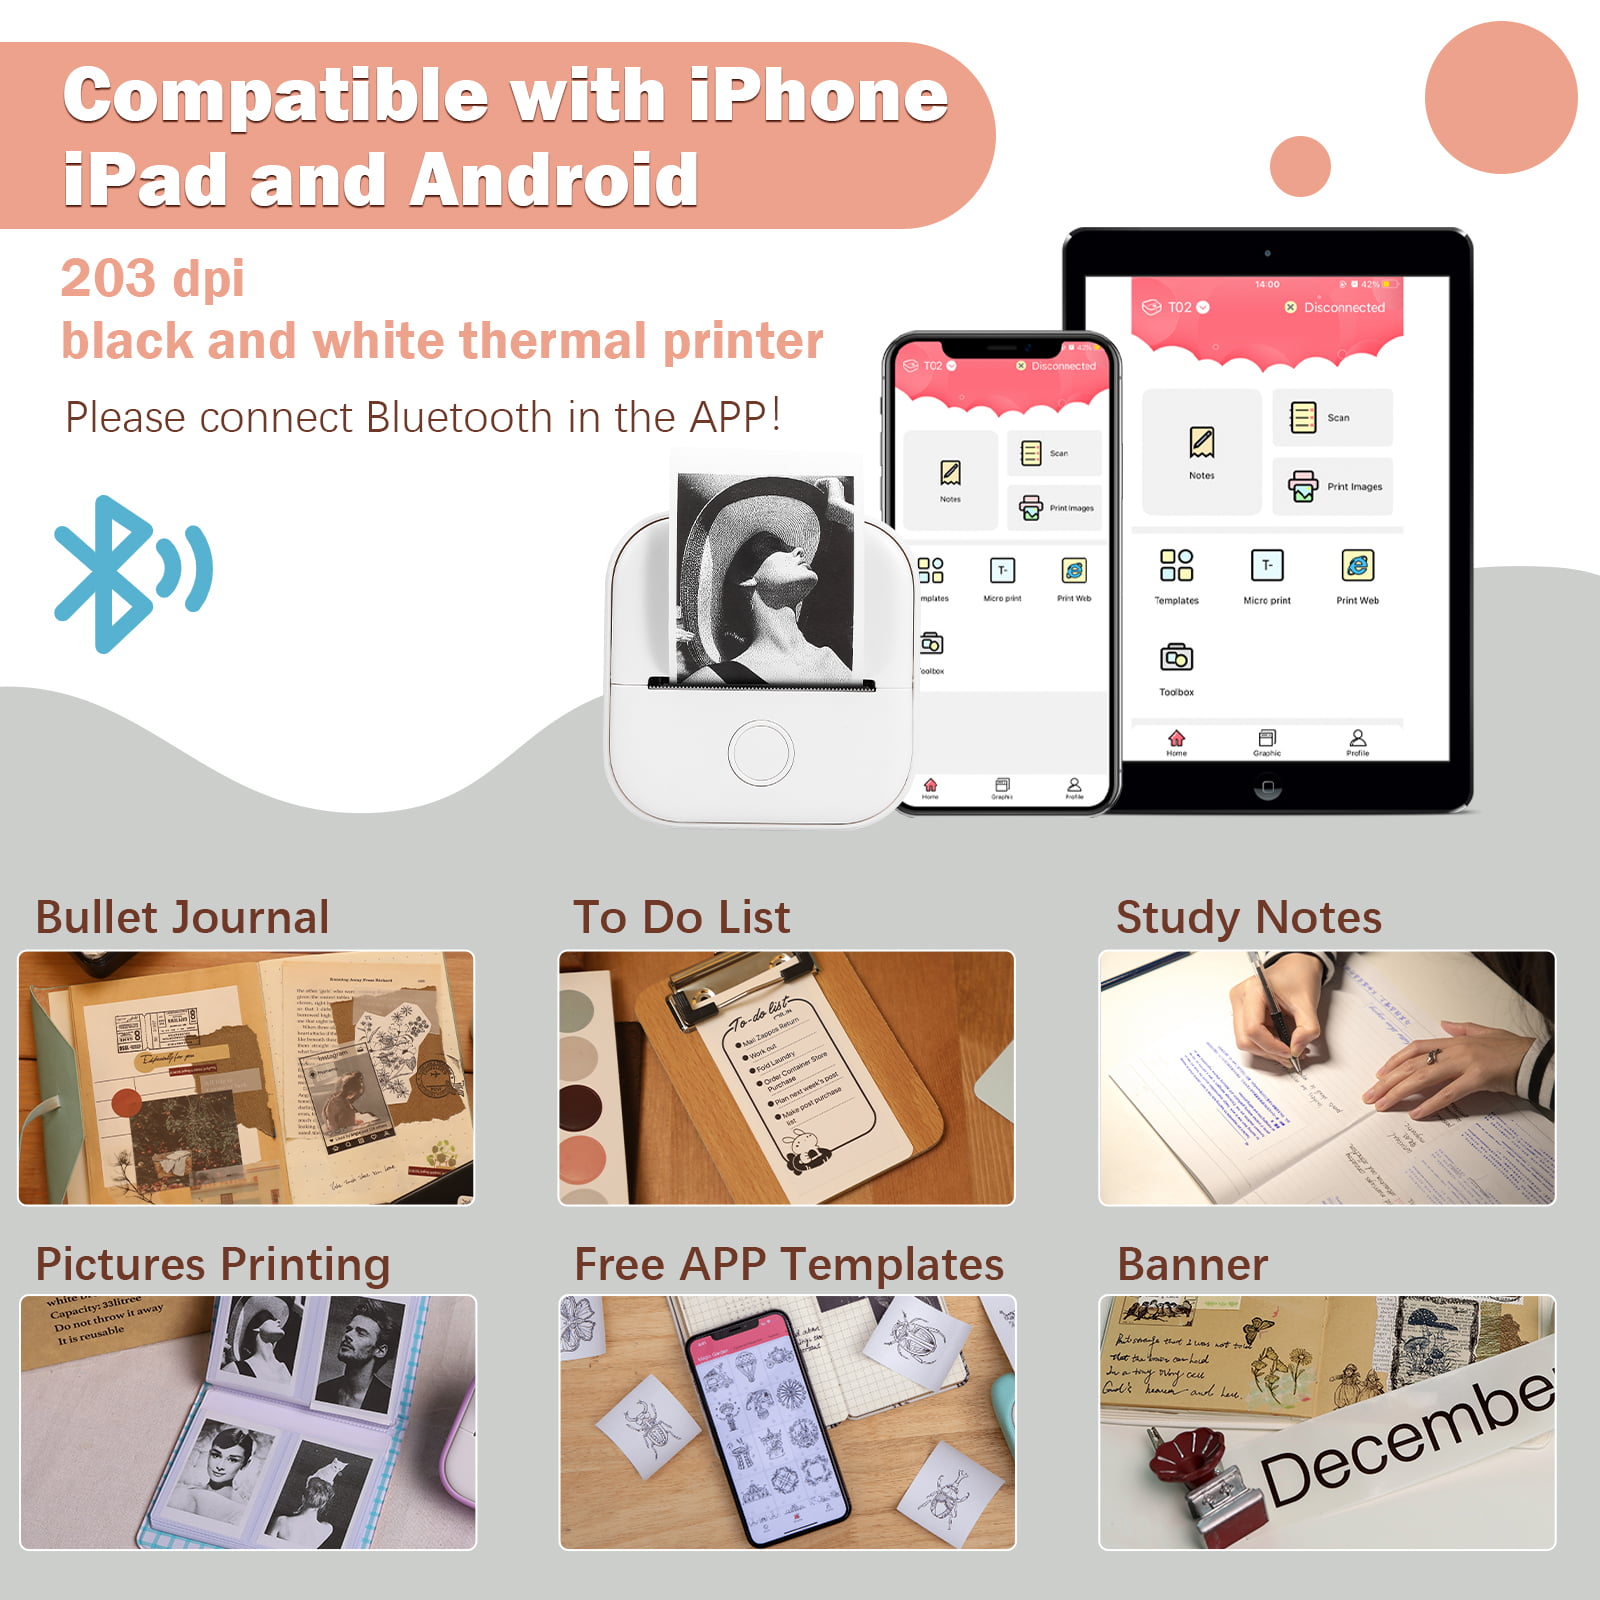 Phomemo T02 Mini Portable Thermal Printer – b.savvi